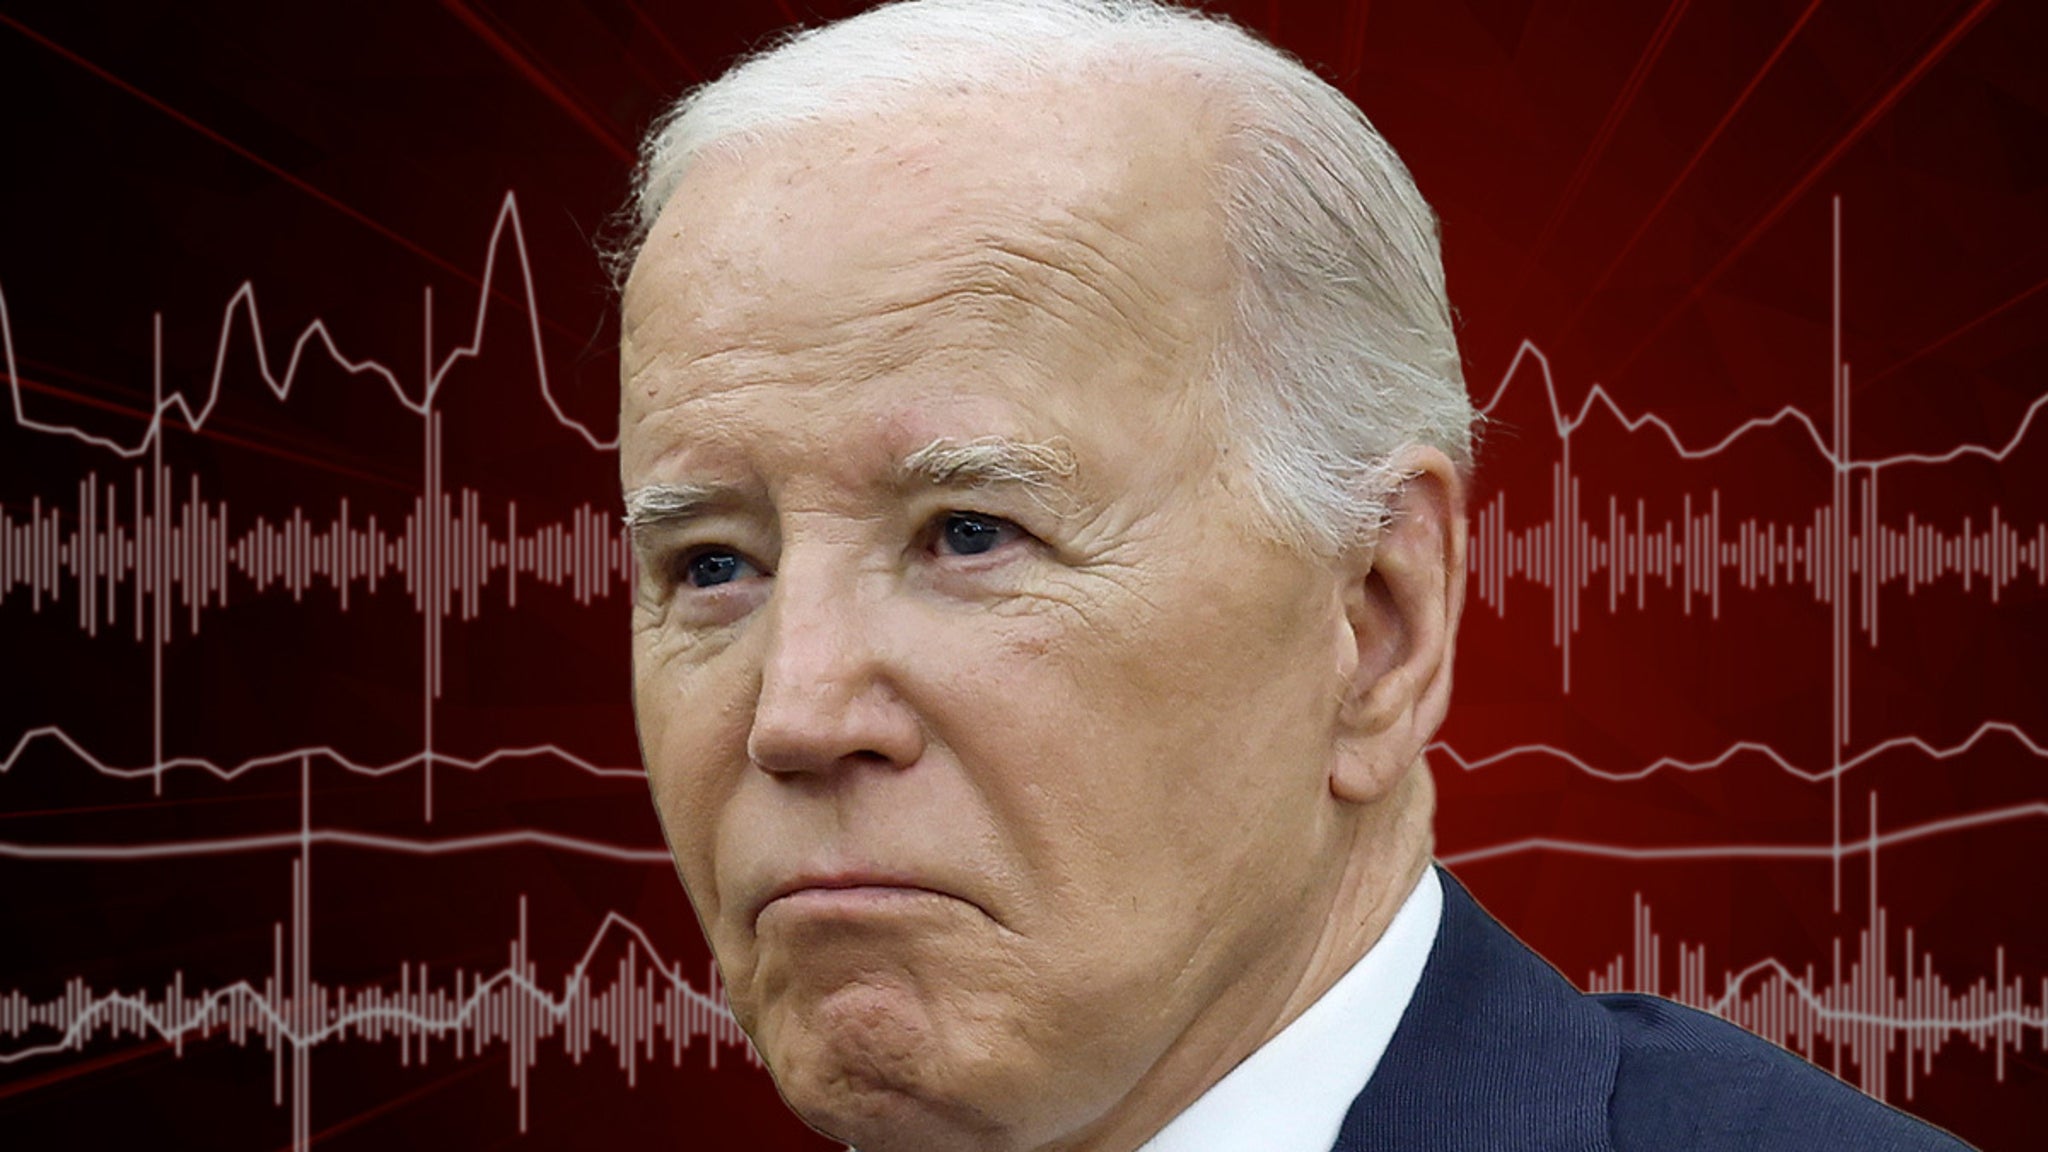 Joe Biden Tells Howard Stern He Contemplated Suicide After Family Deaths